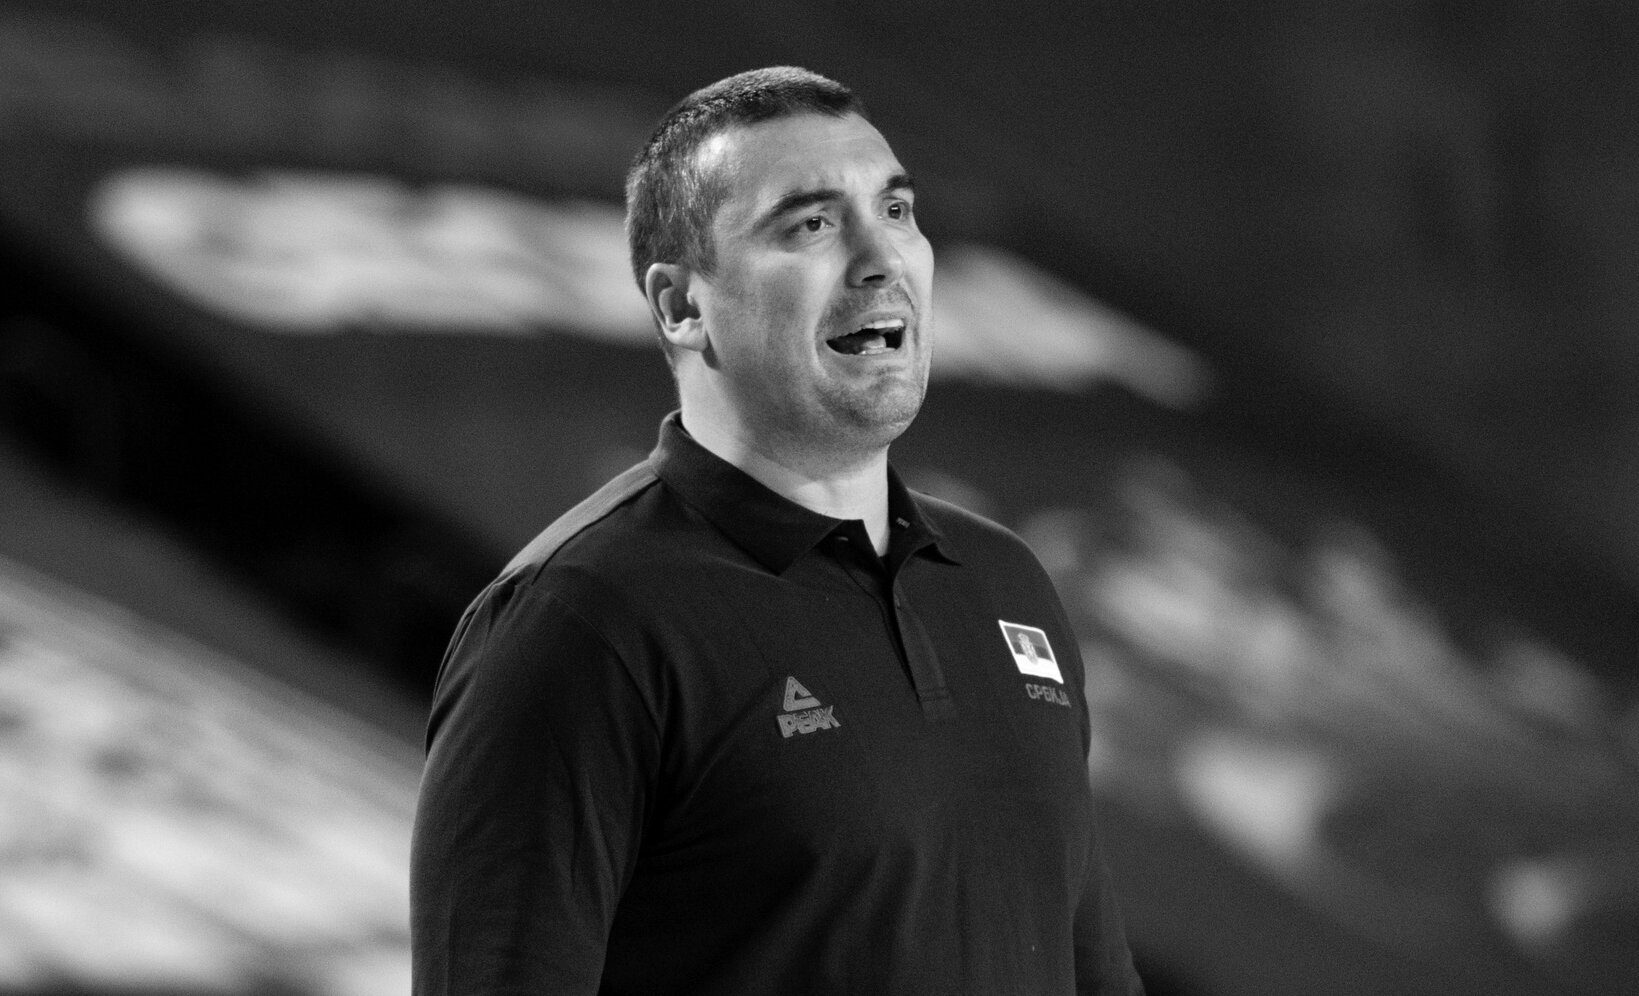 Warriors assistant coach Dejan Milojevic dead at 46 after heart attack